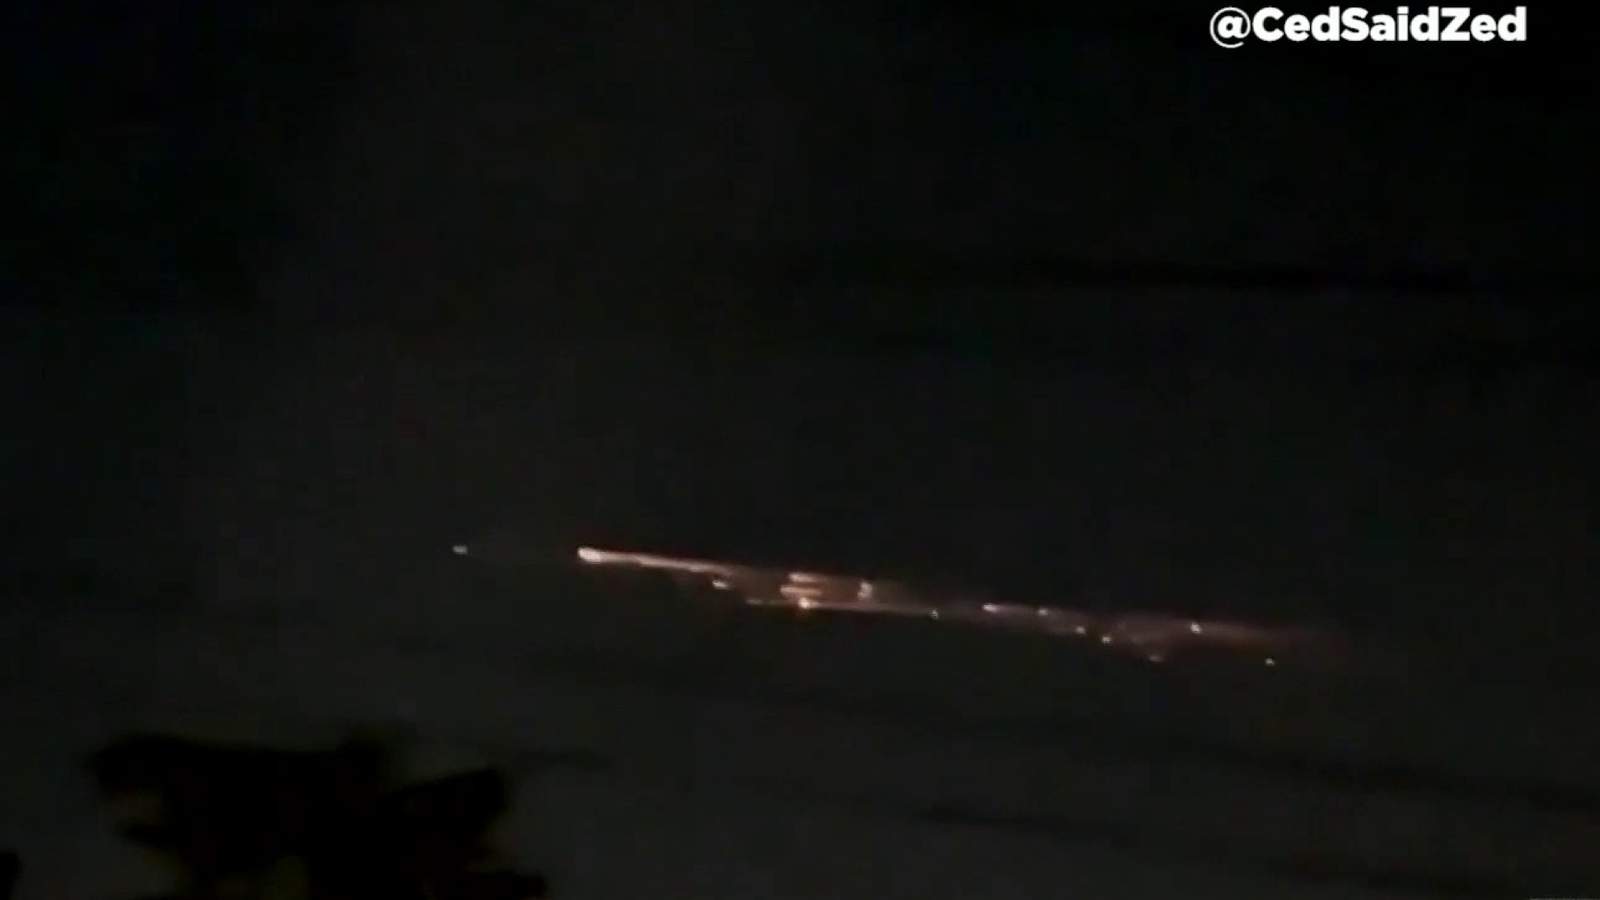 SpaceX debris? Bright lights streaking across sky from Falcon 9 rocket